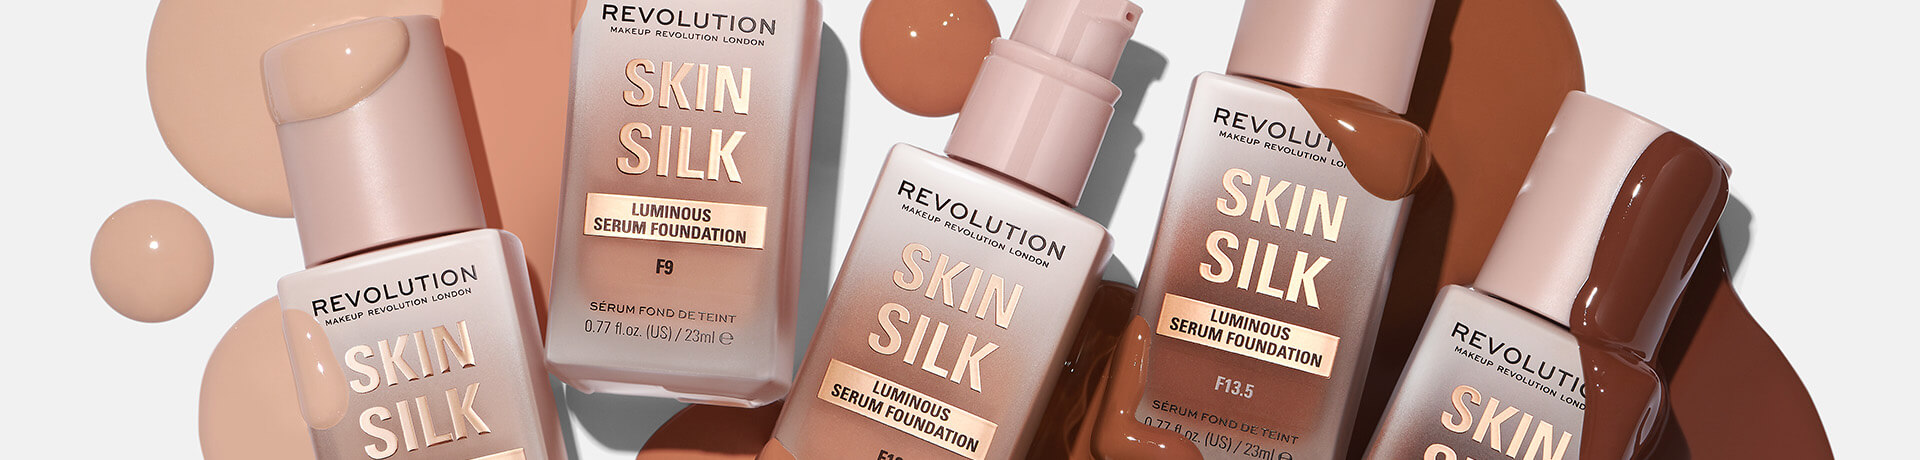 Première Impression Sur Skin Silk